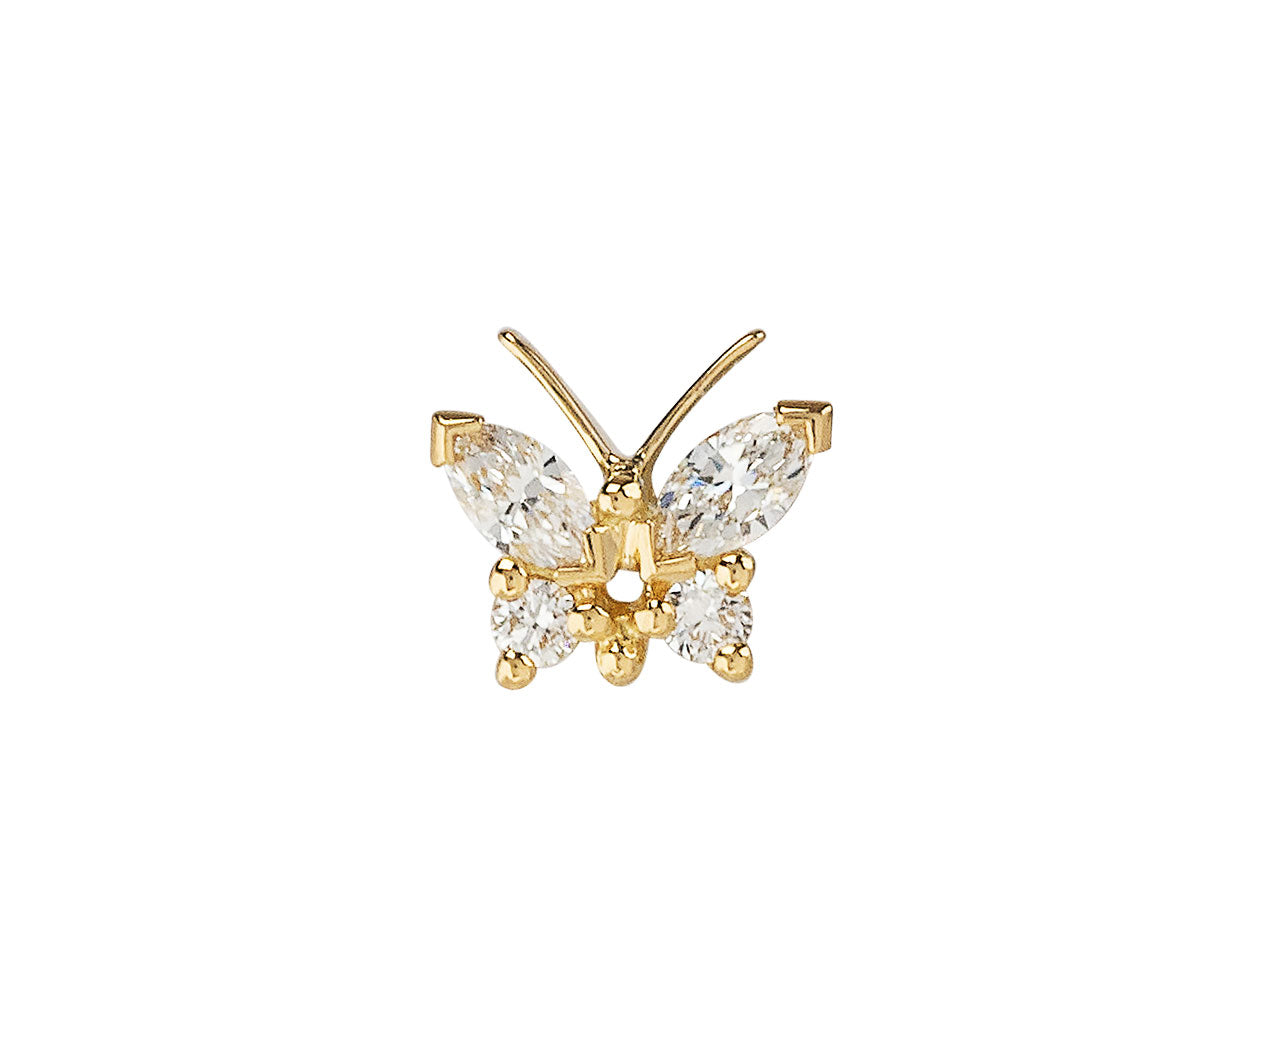 Maria Black 14kt yellow gold Molten diamond stud earring